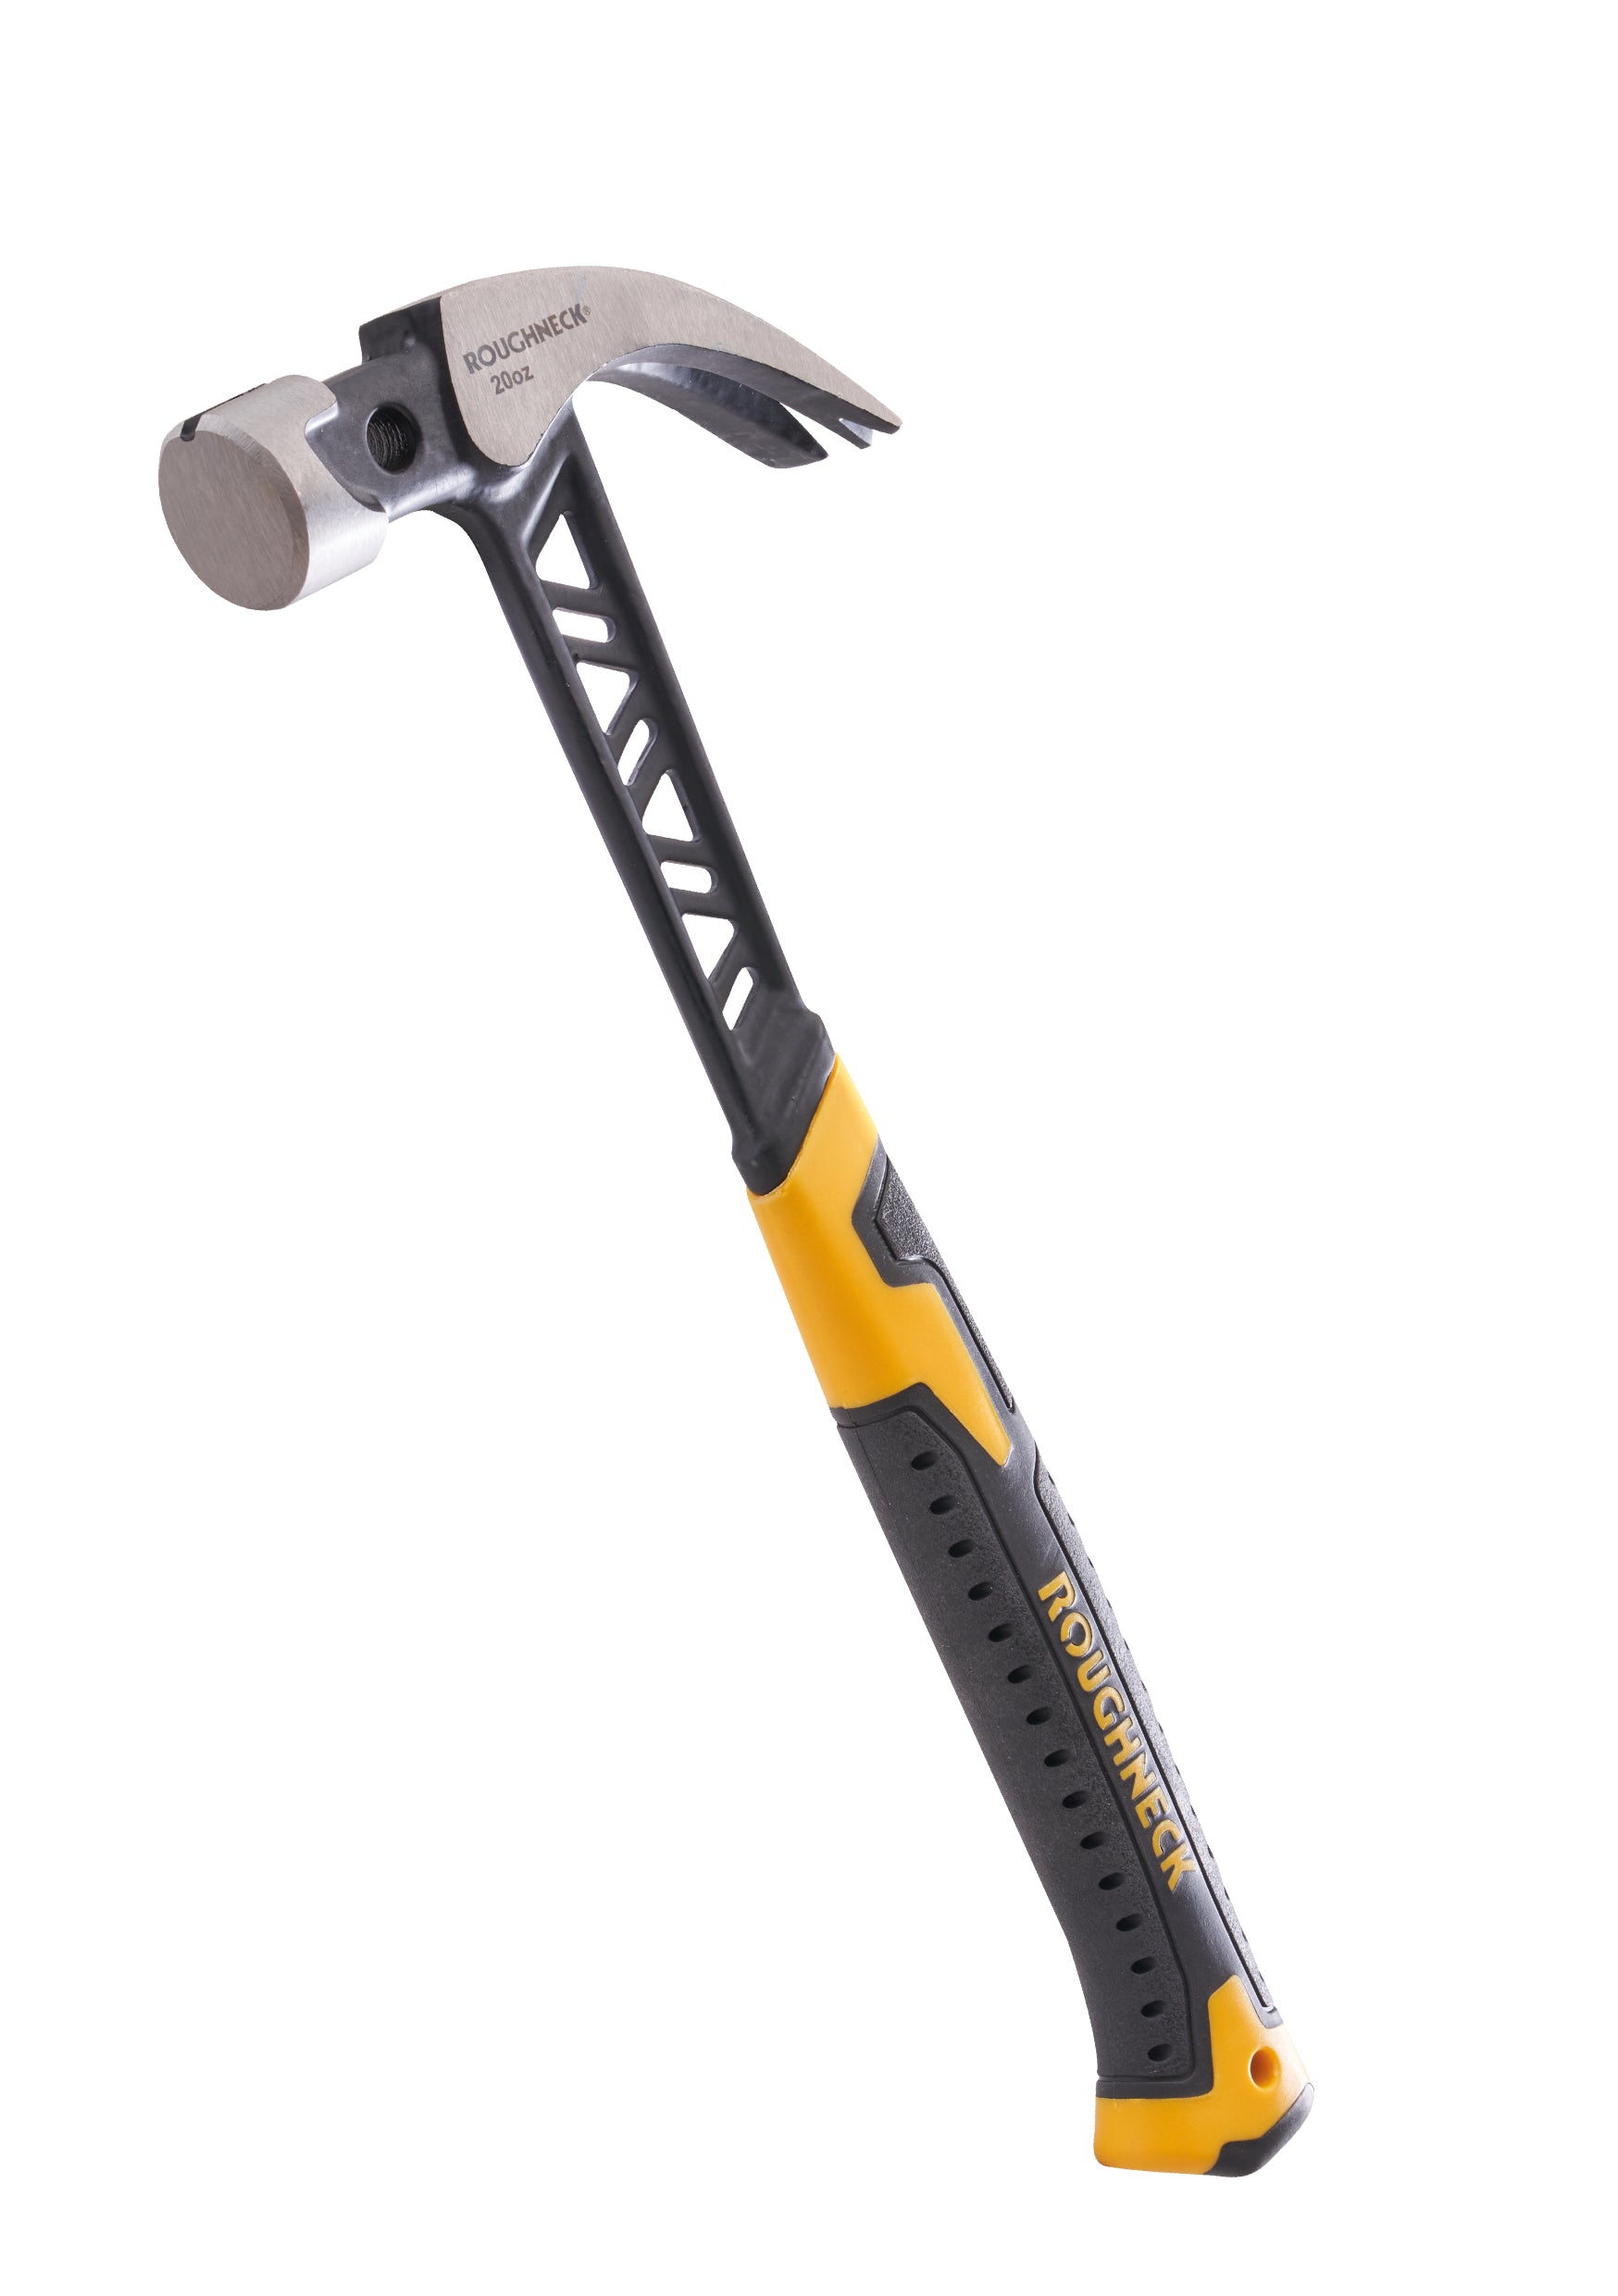 XMS Roughneck Gorilla V-Series Claw Hammer 567g (20oz)